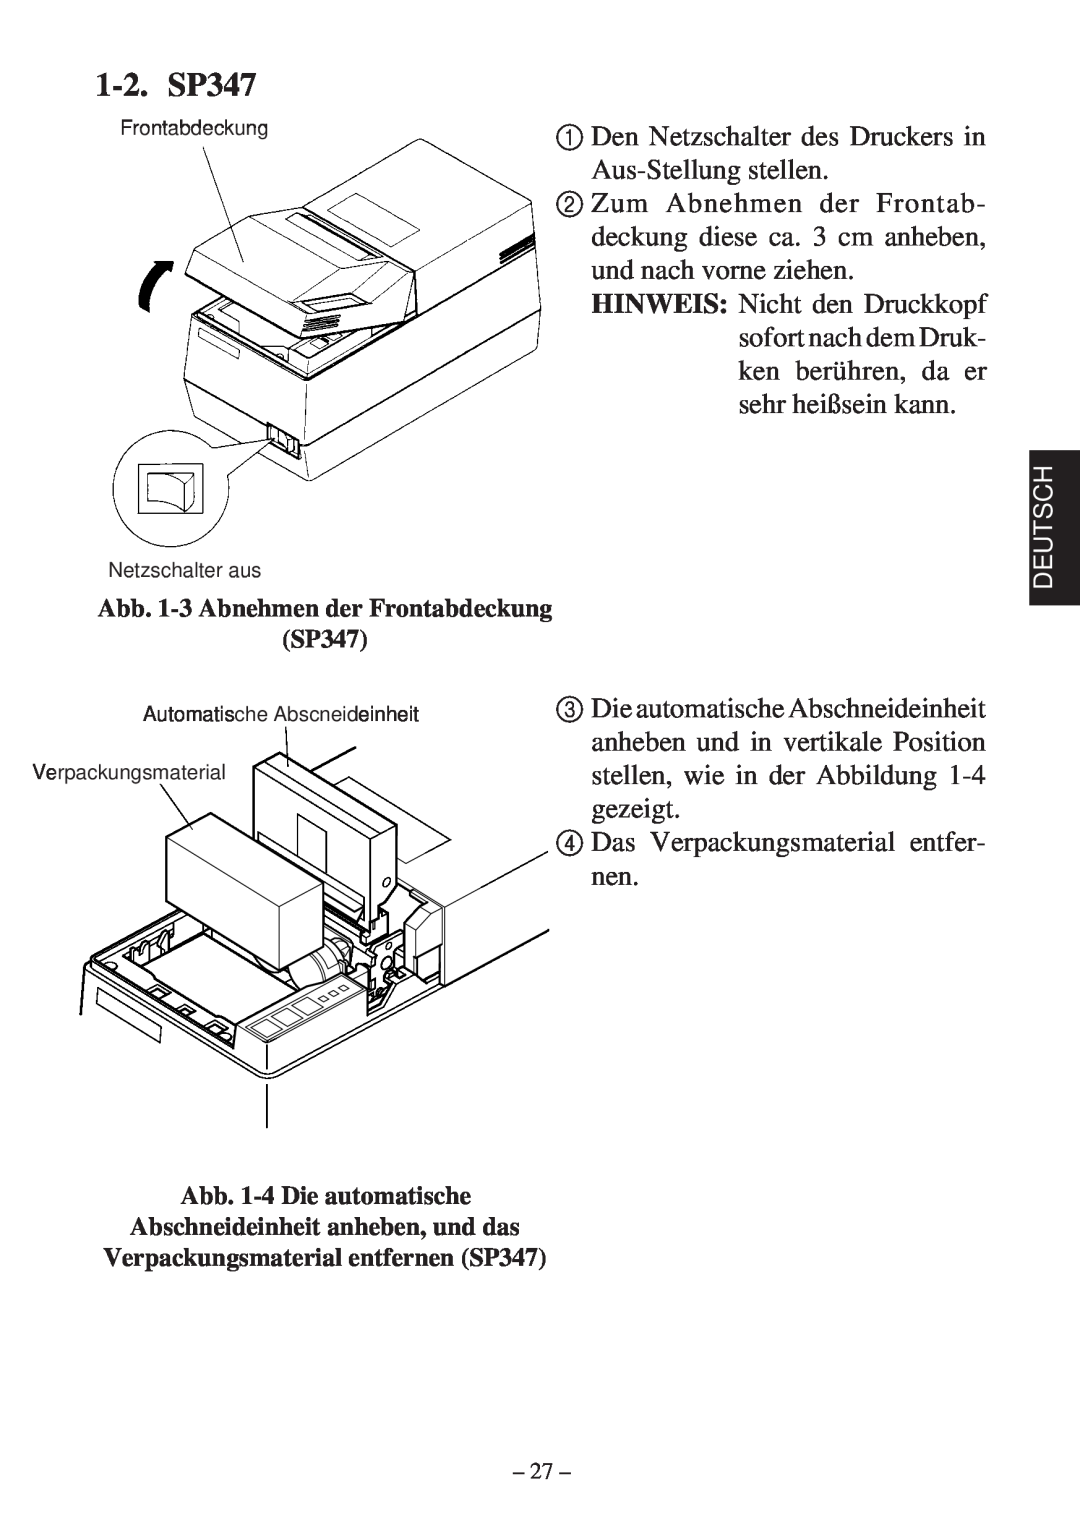 Star Micronics 347F user manual 1-2. SP347, Abb. 1-3 Abnehmen der Frontabdeckung SP347, Verpackungsmaterial entfernen SP347 